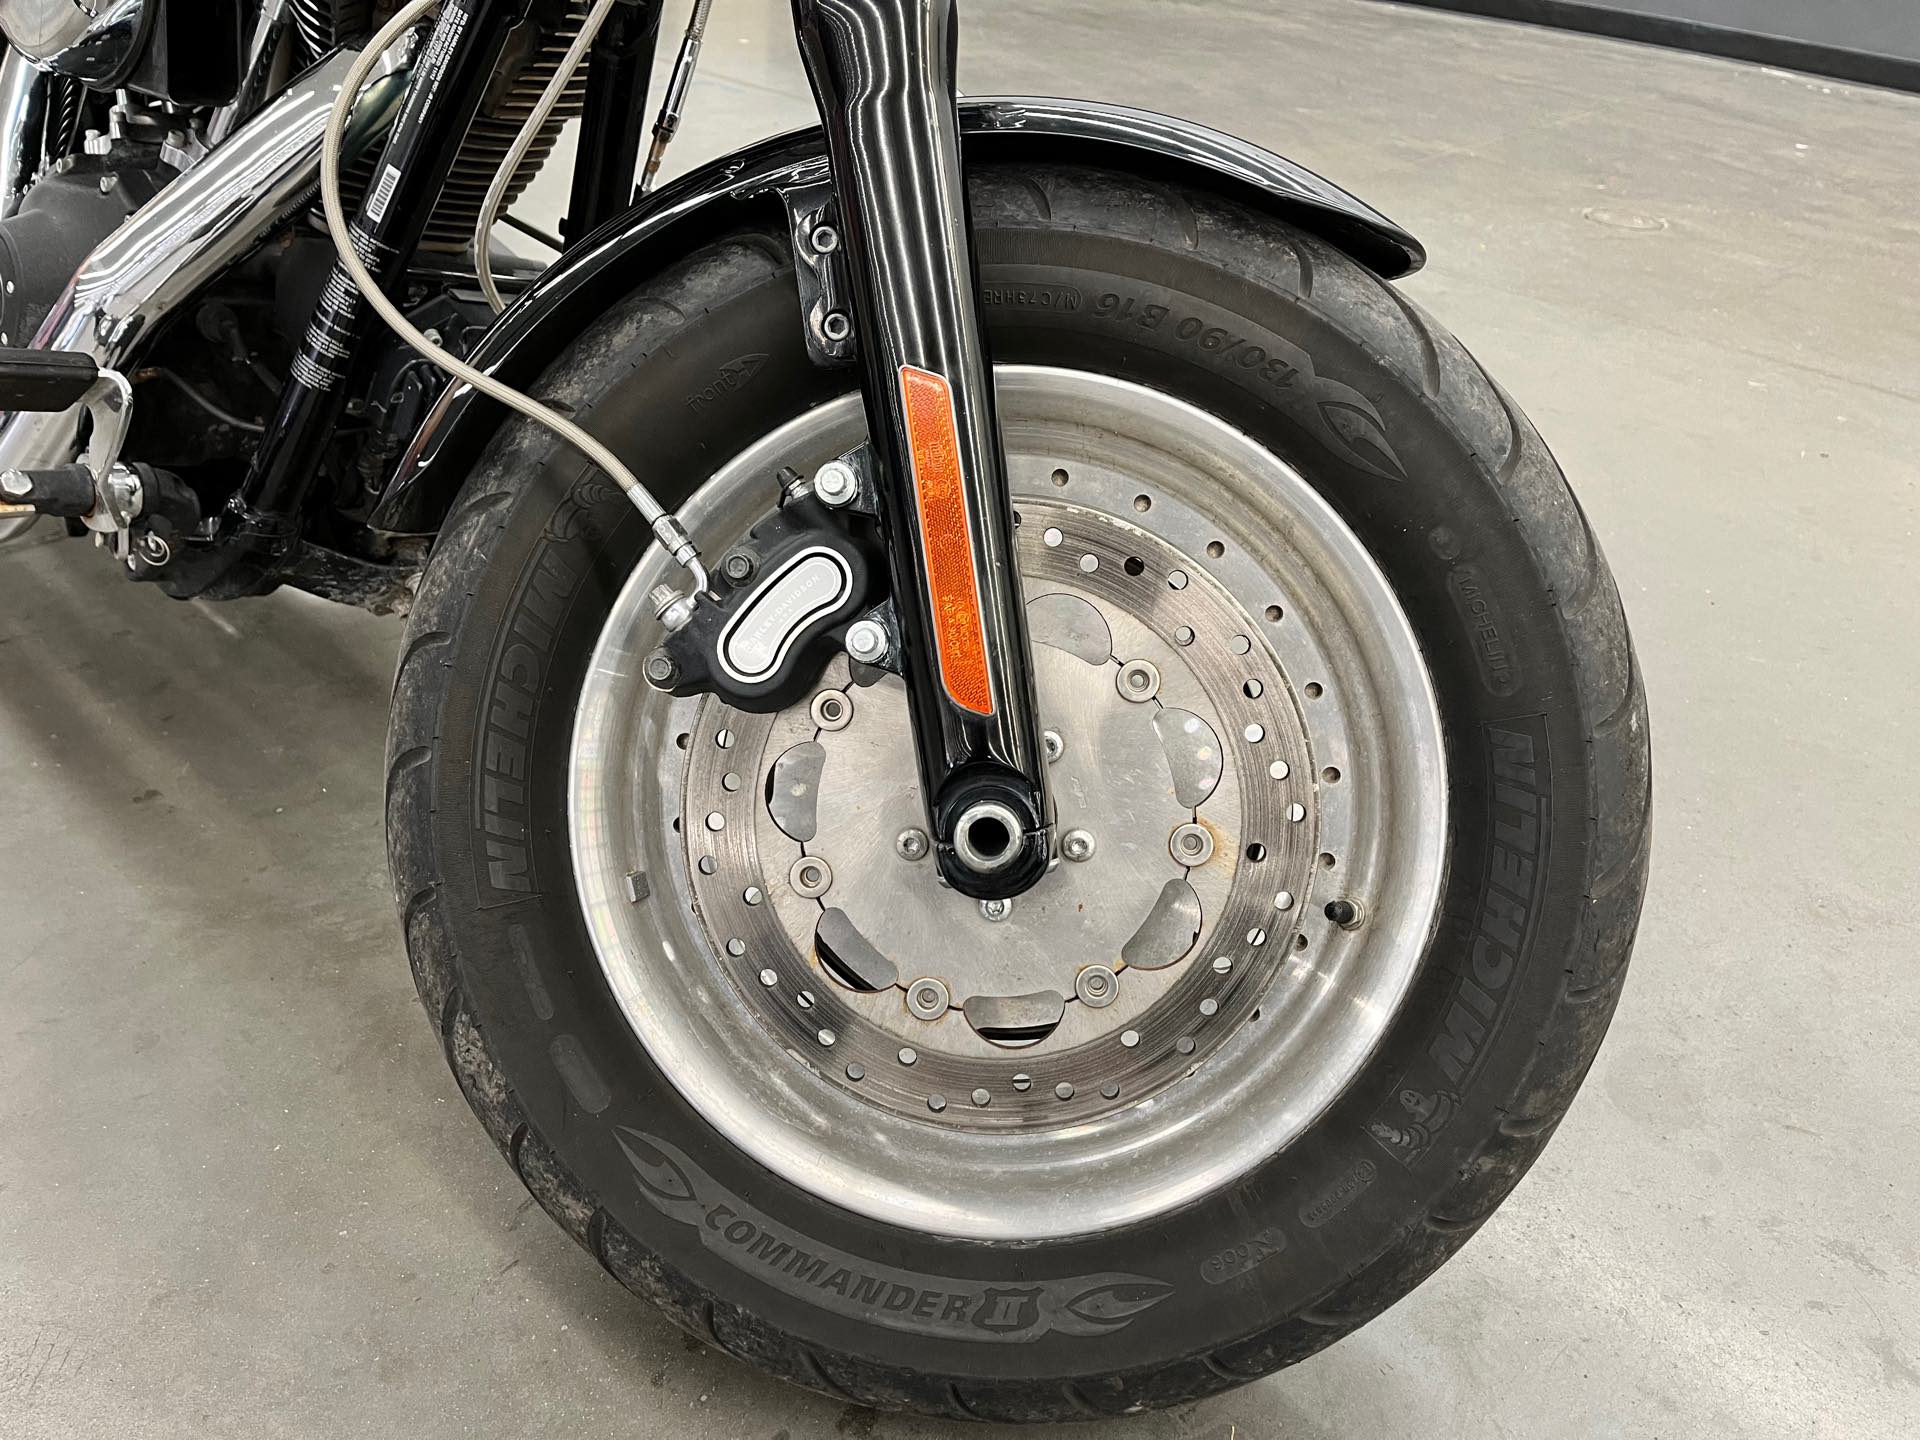 2013 Harley-Davidson Dyna Fat Bob at Aces Motorcycles - Denver